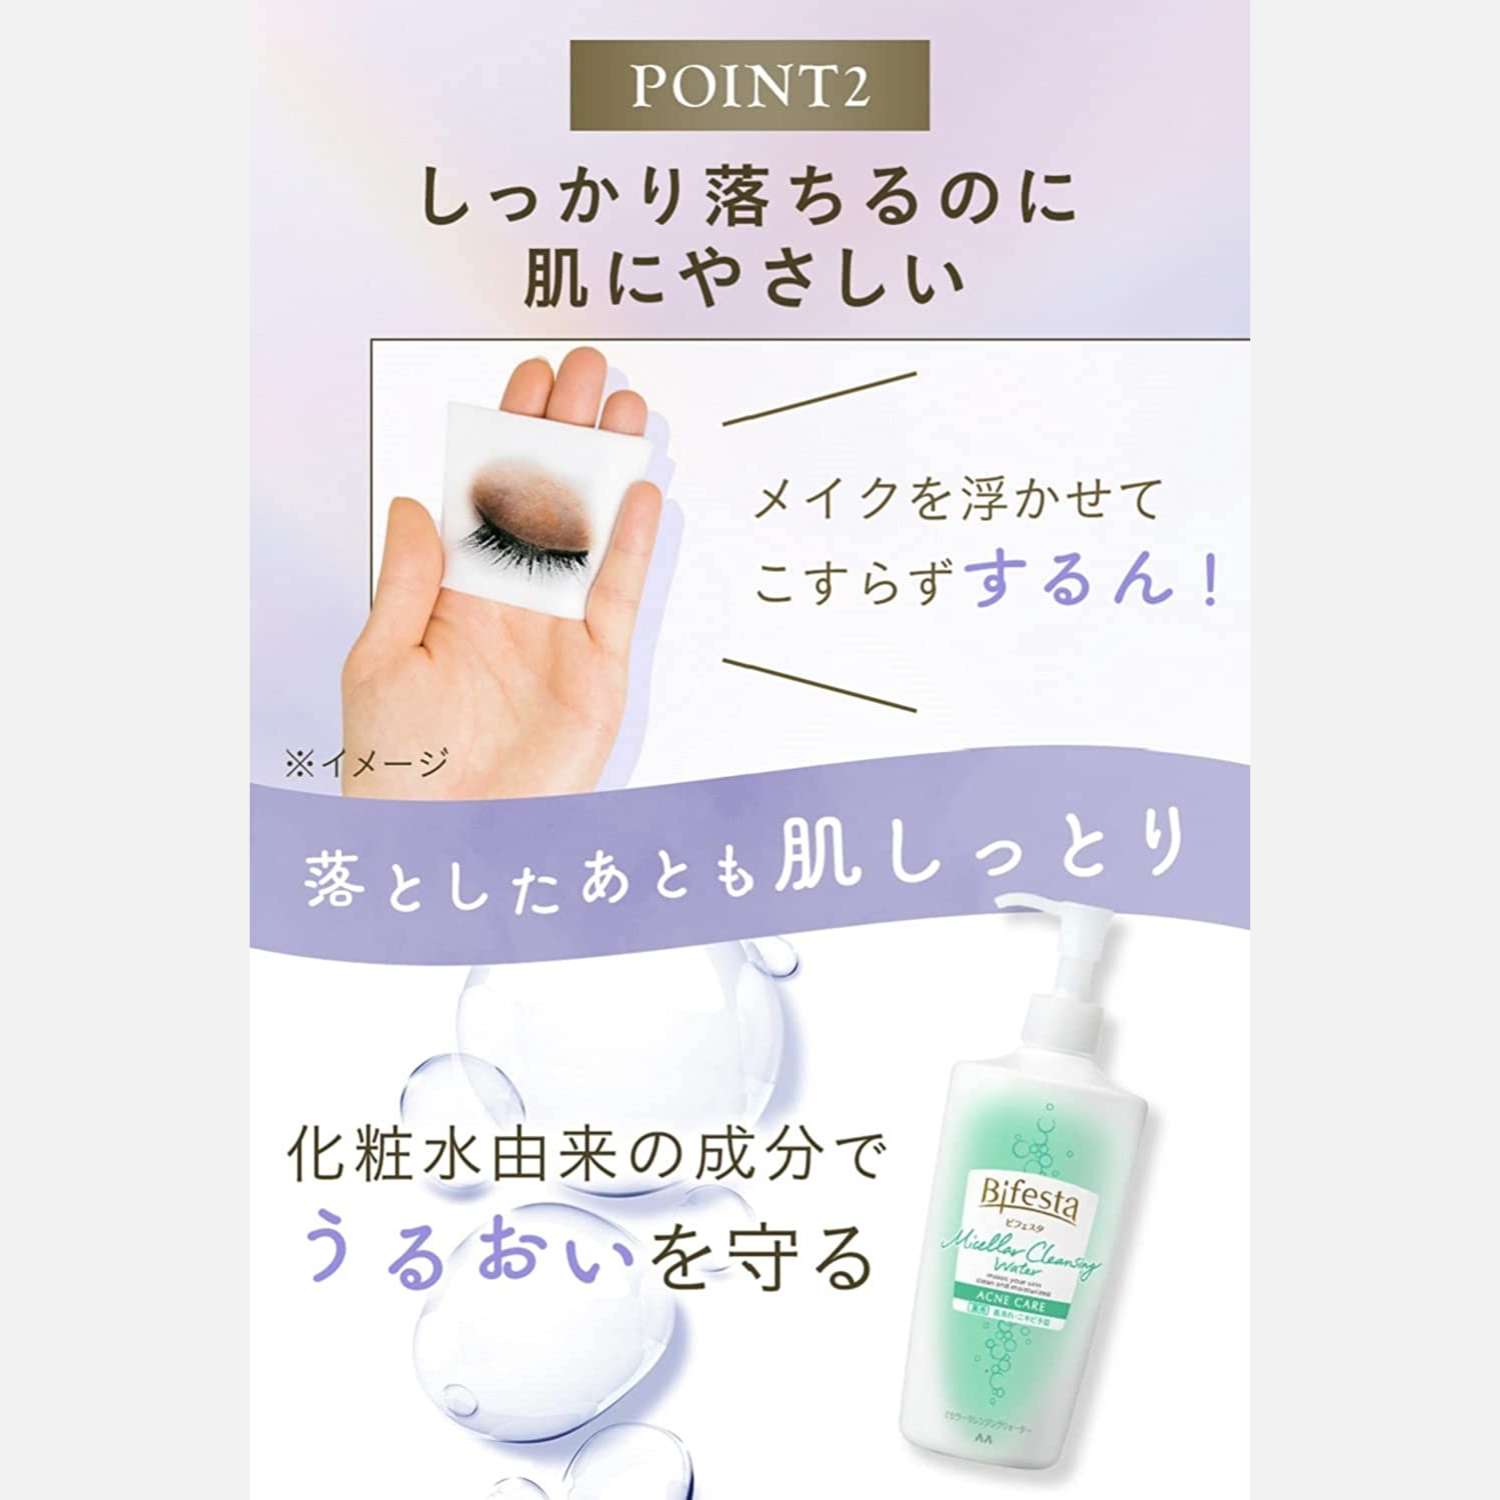 Bifesta Micellar Cleansing Water Acne Clear 400ml - Buy Me Japan